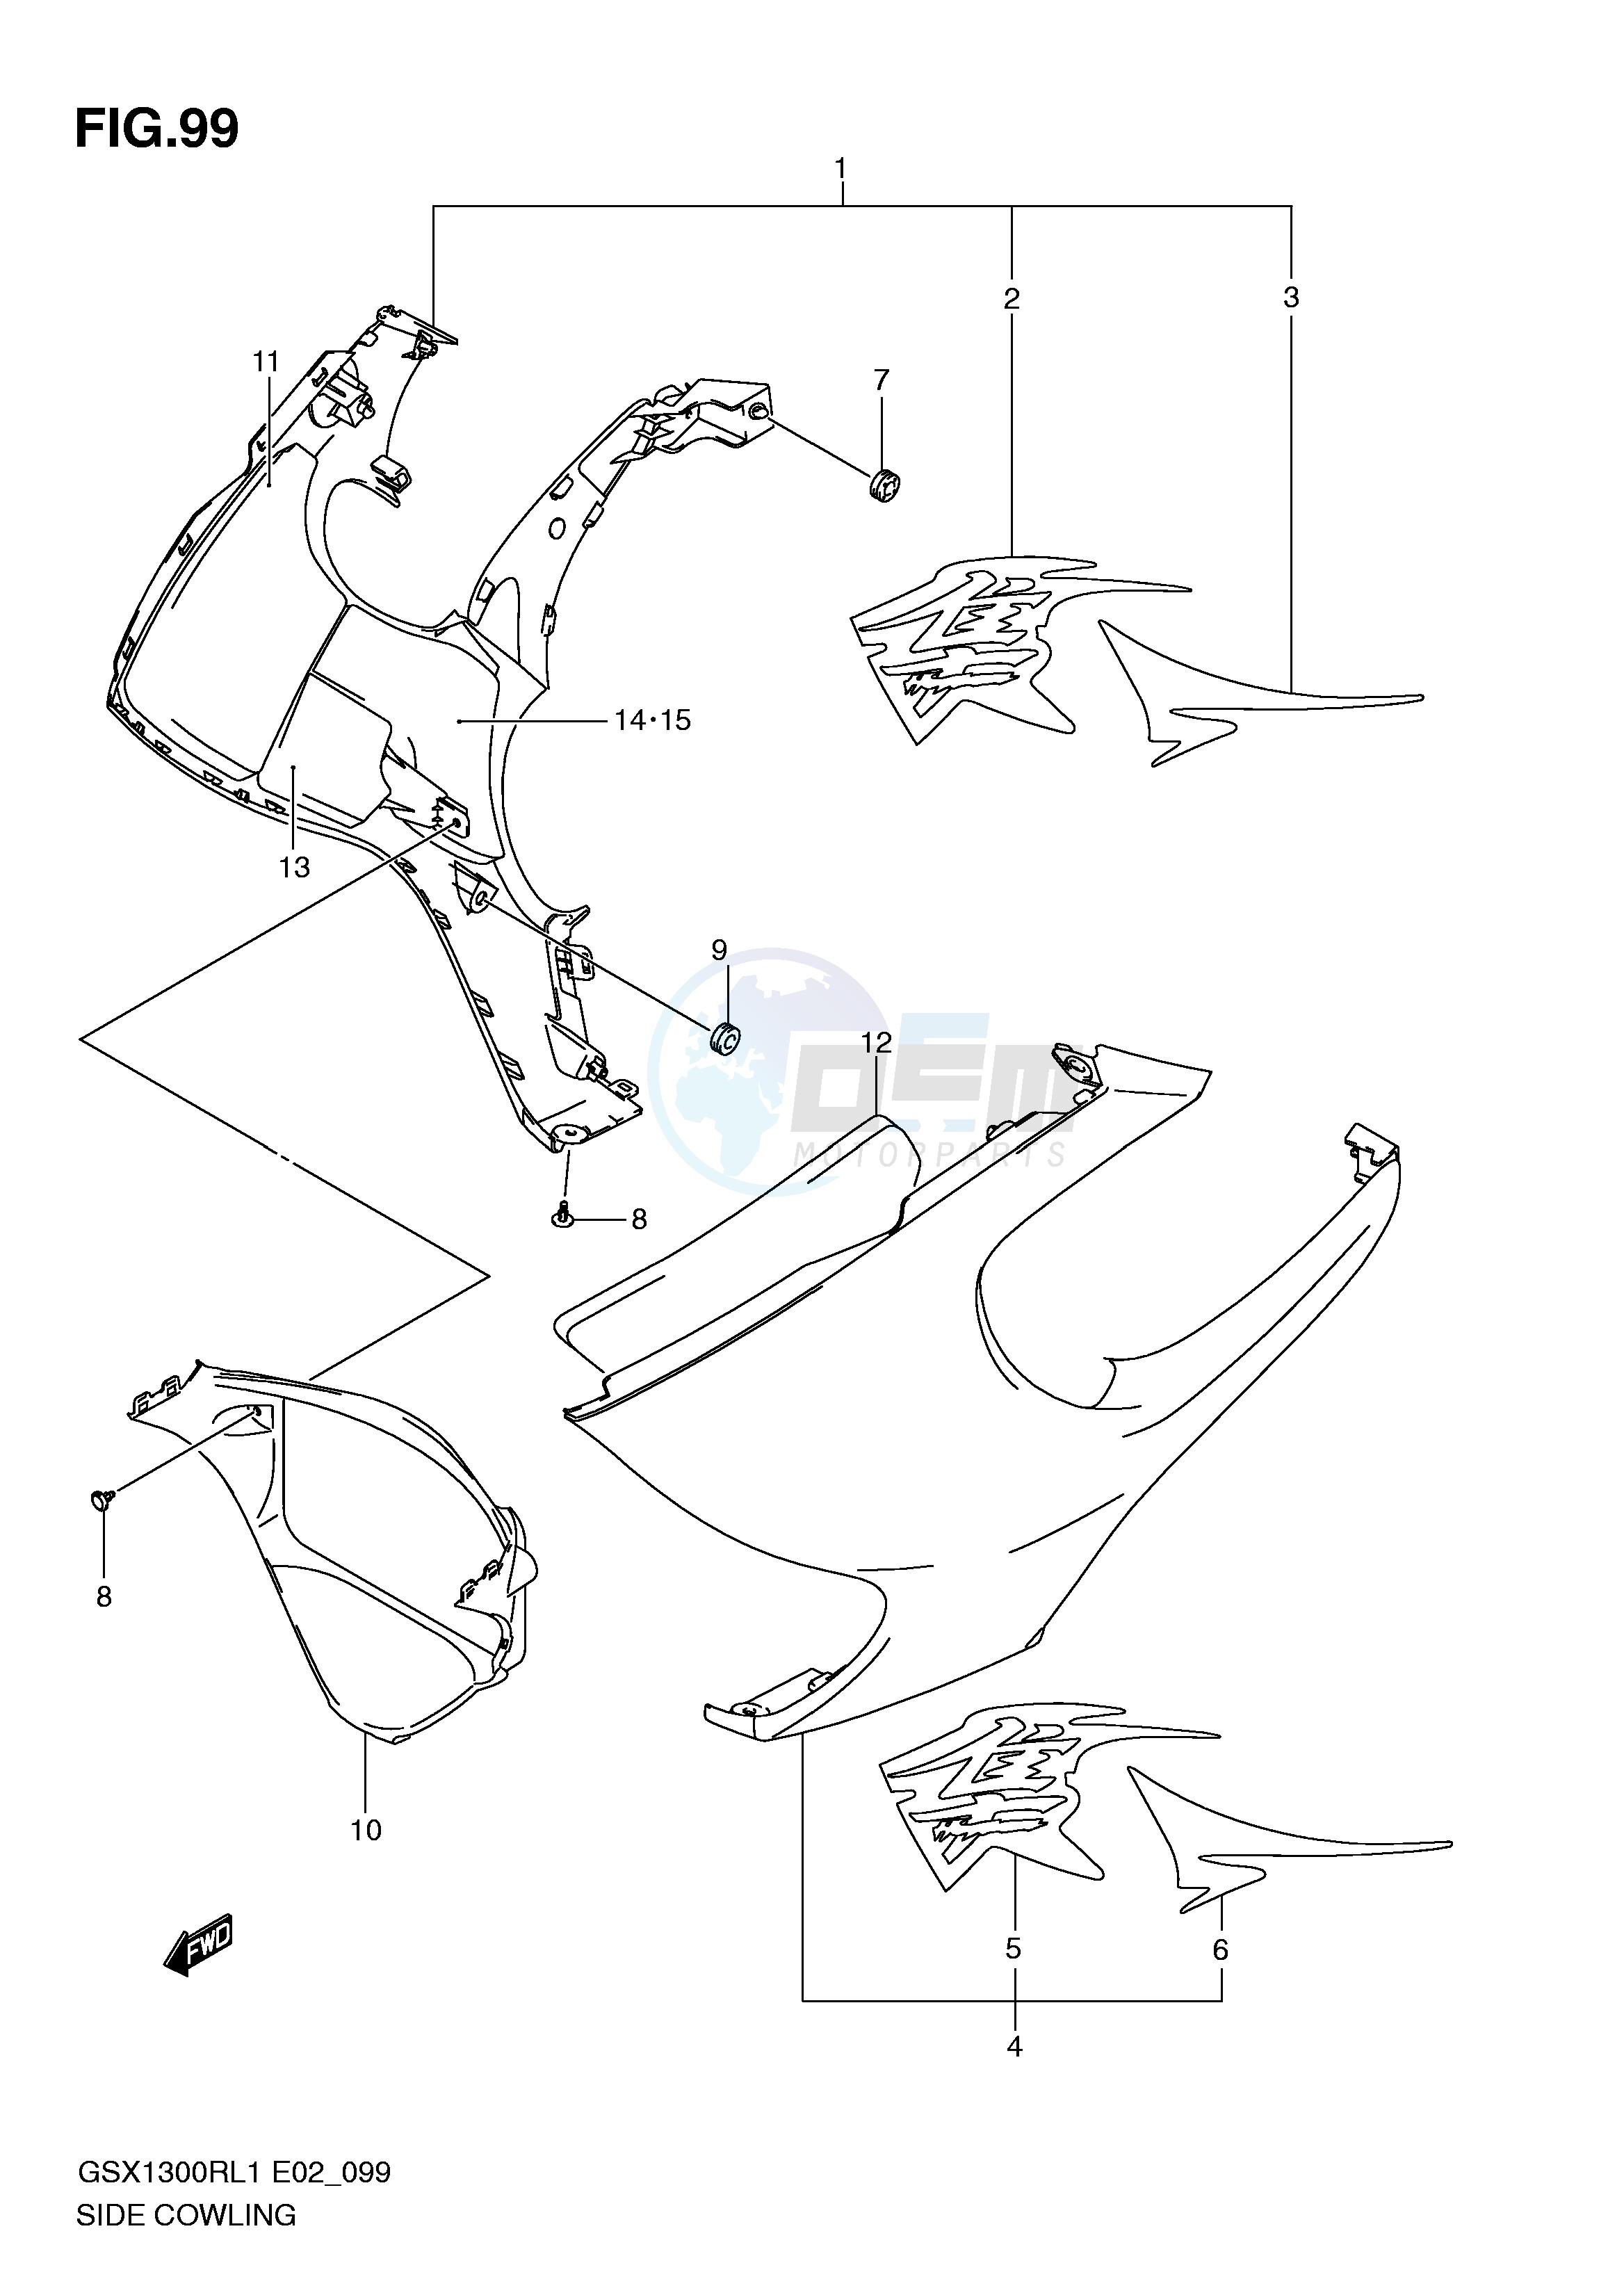 SIDE COWLING (GSX1300RL1 E14) blueprint